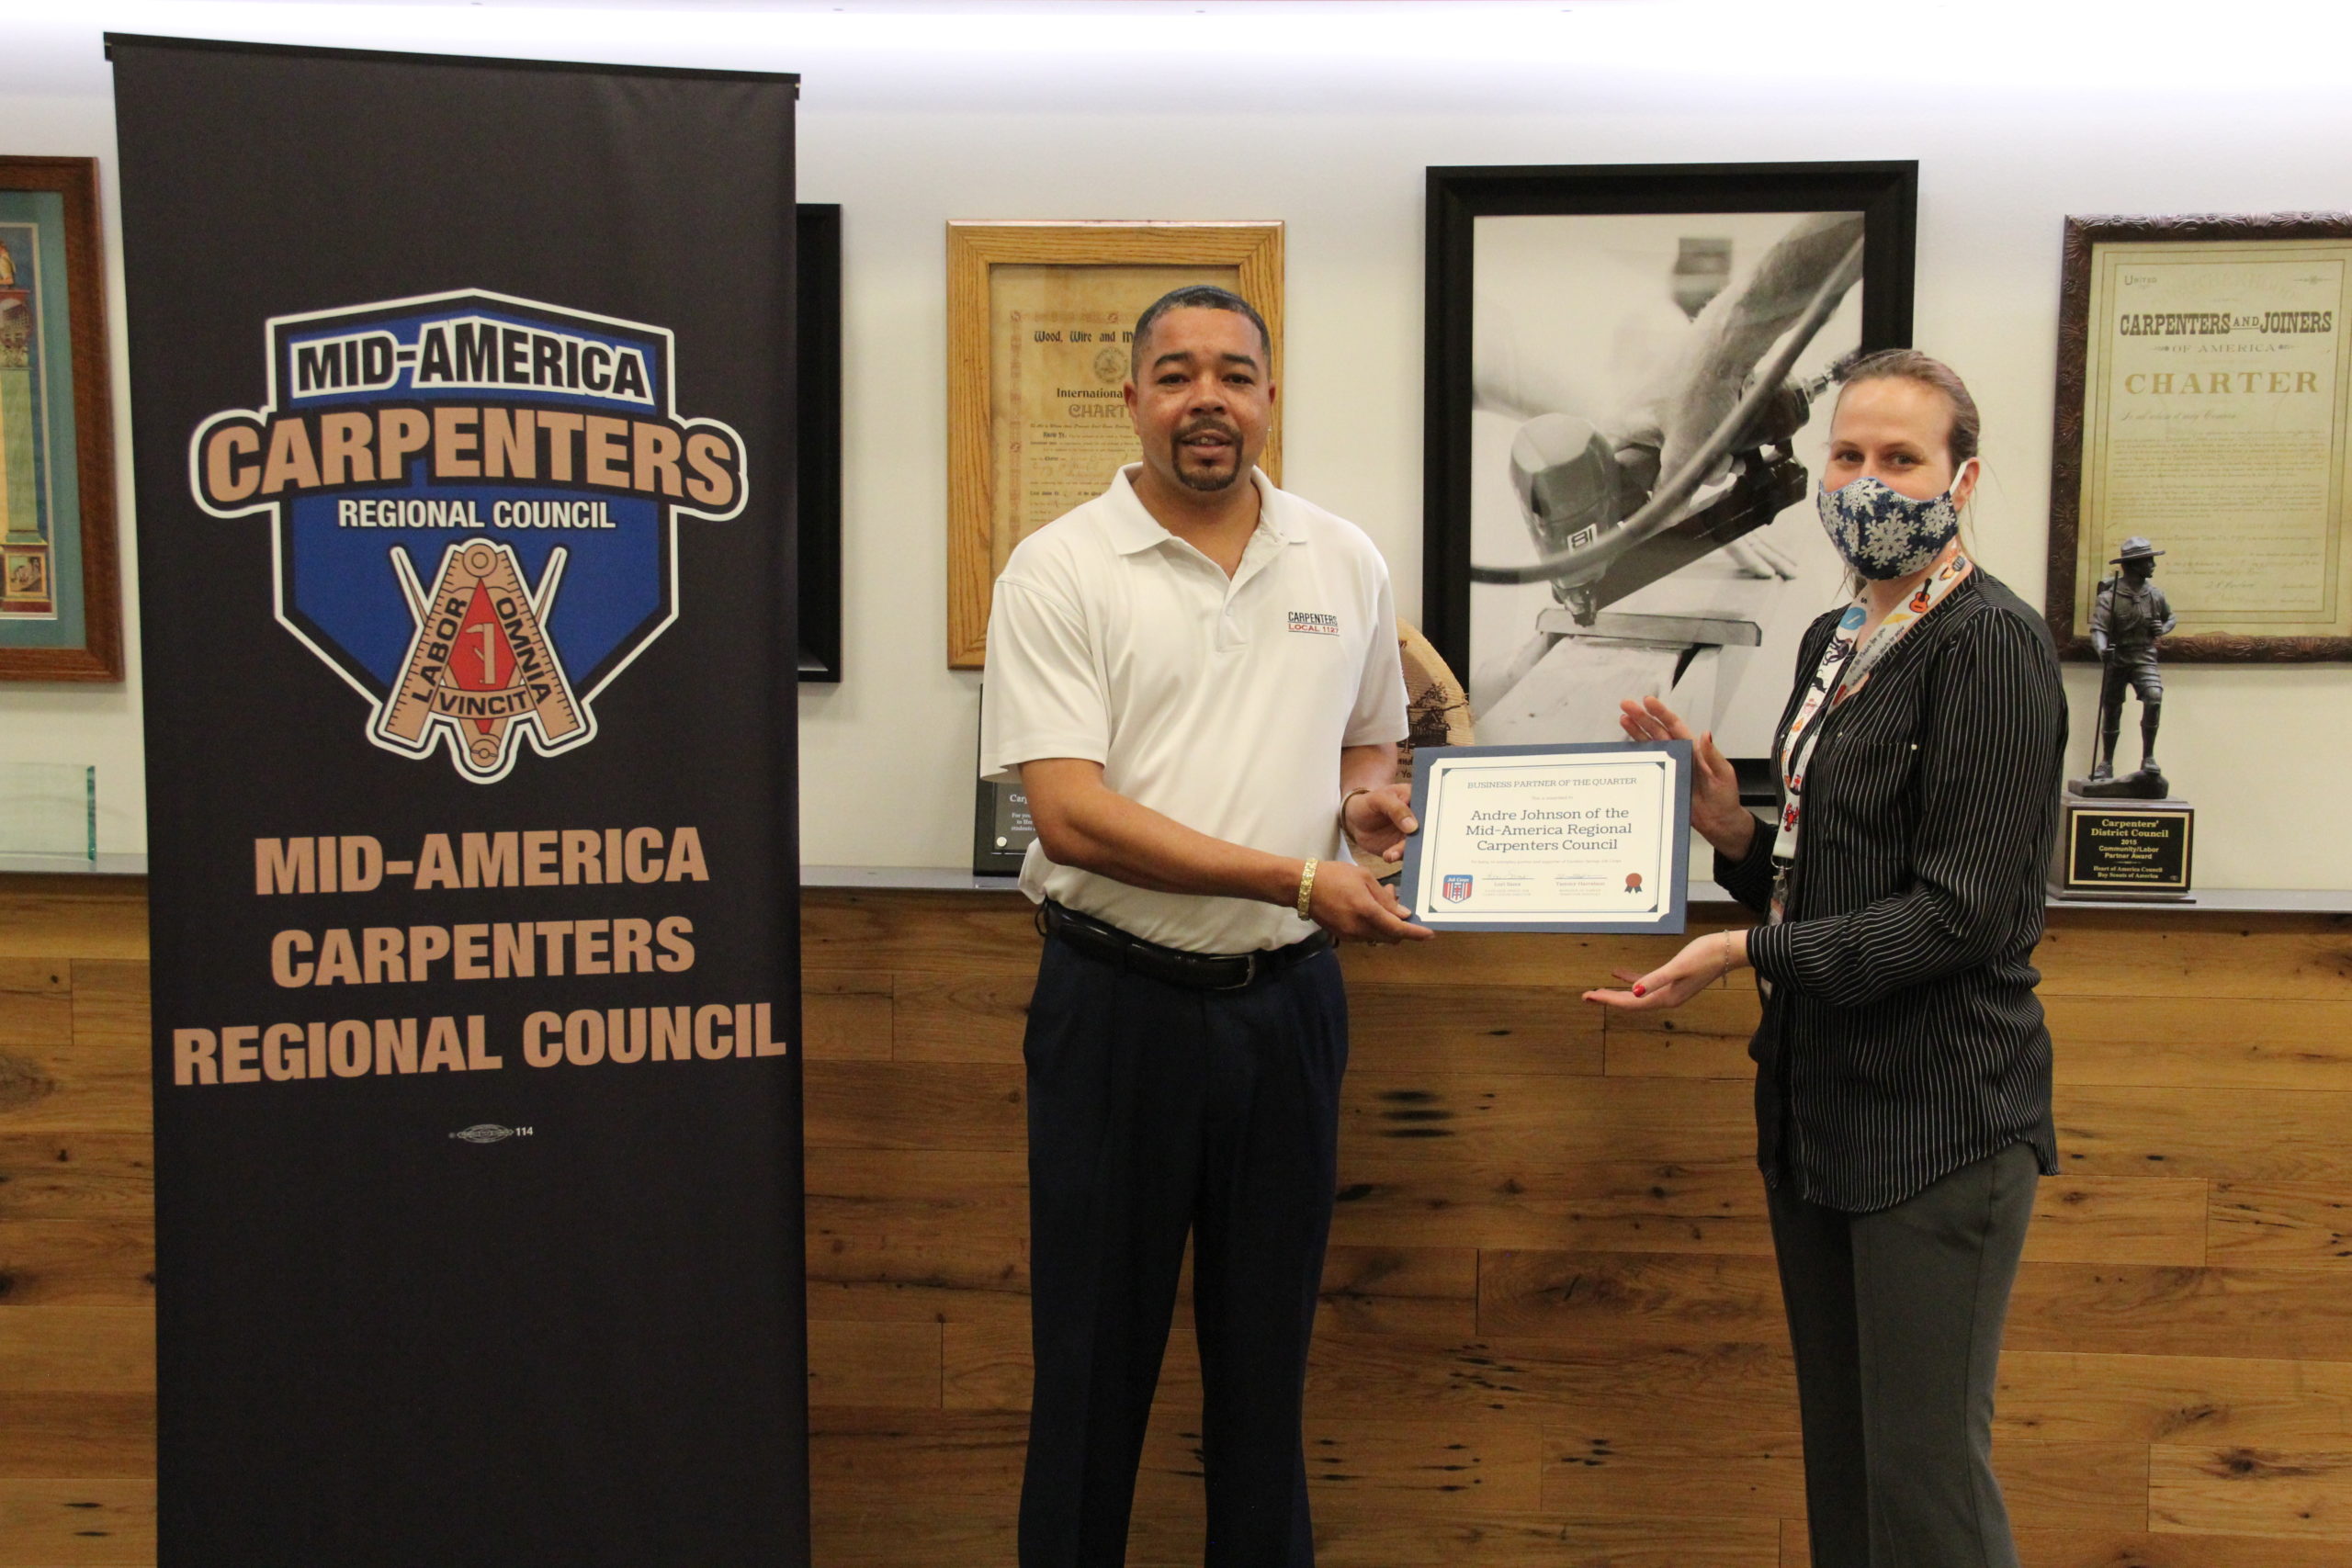 Kansas City rep Andre Johnson receives award from Job Corps